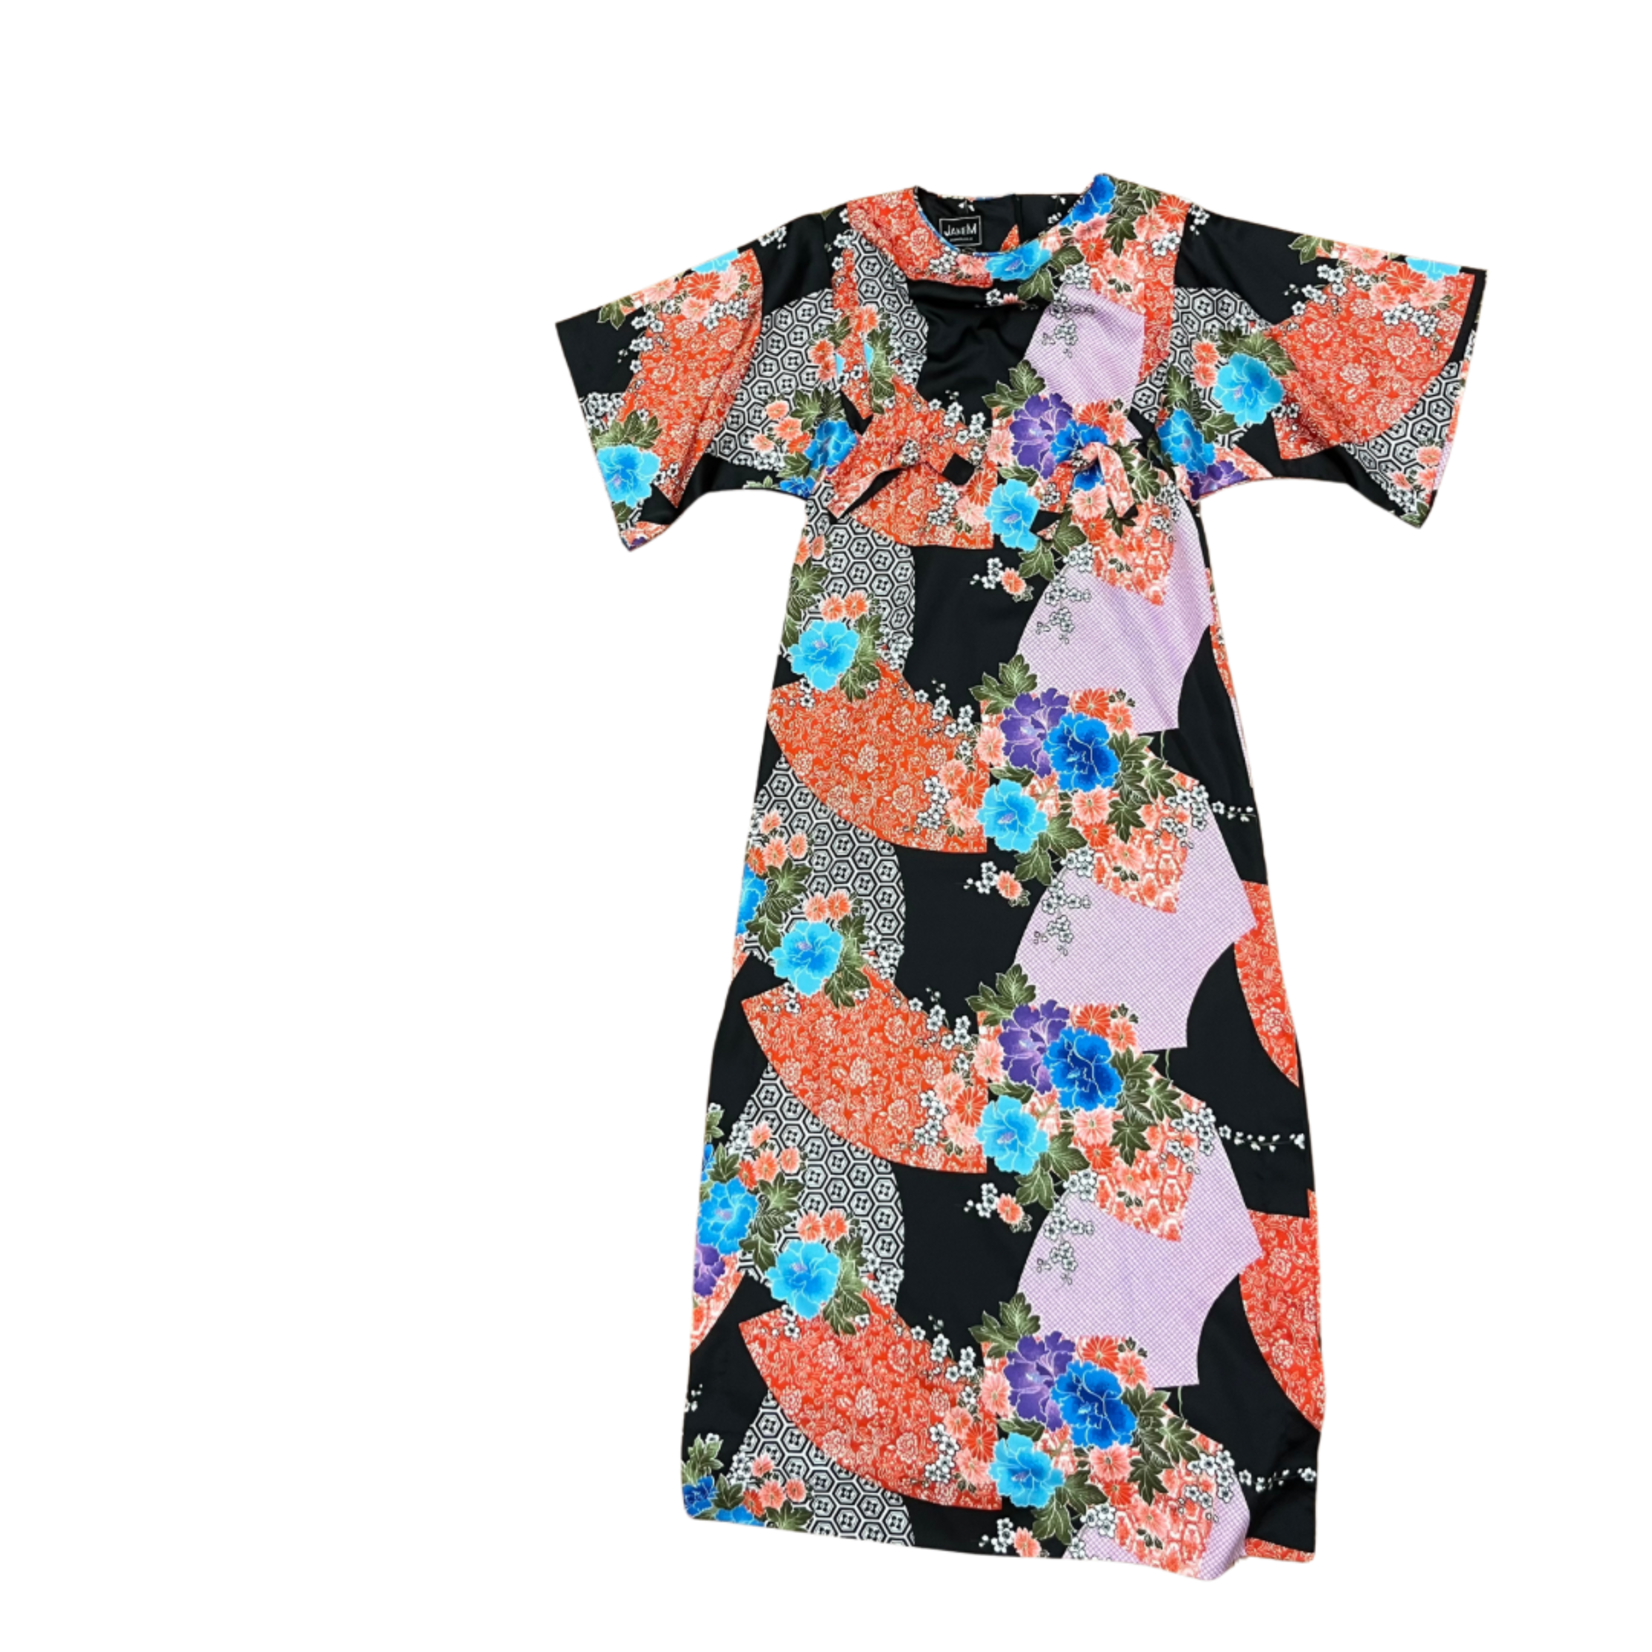 Mission Zero Women’s Vintage Dress - Janem - Asian Print Front Bow Mu’umu’u - XS